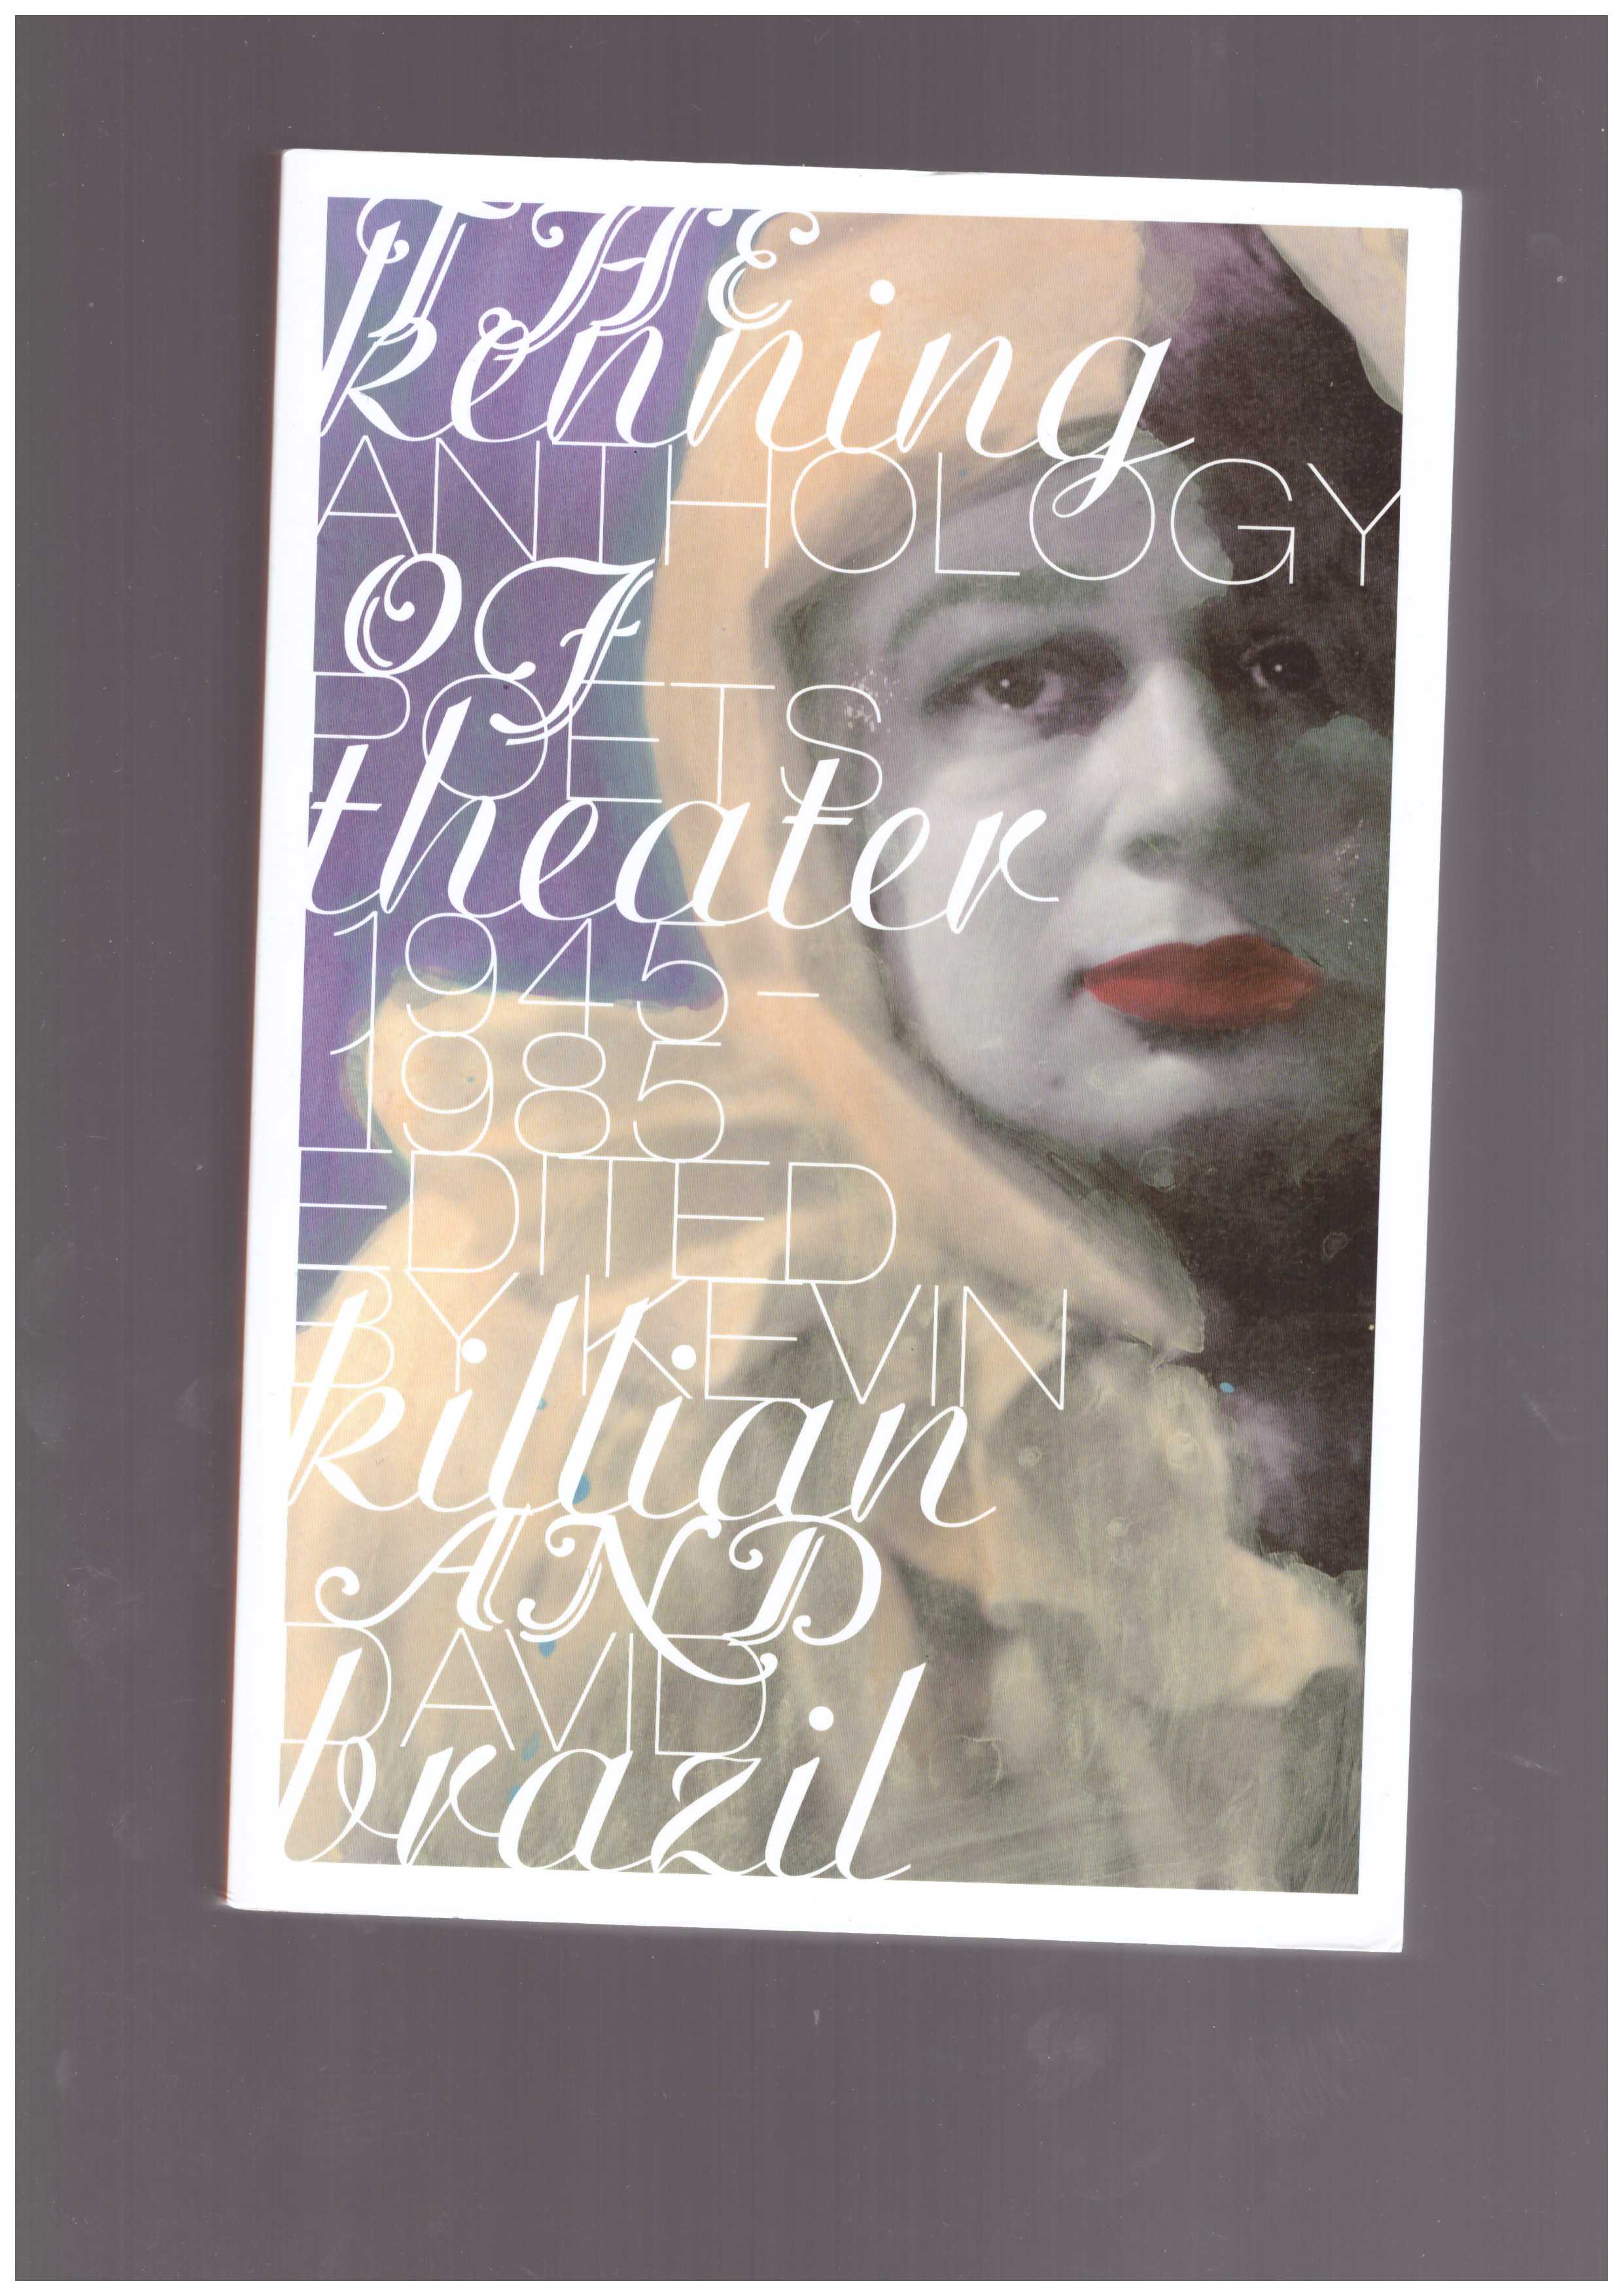 KILLIAN, Kevin; BRAZIL, David (eds.) - The Kenning Anthology of Poets Theater: 1945-1985